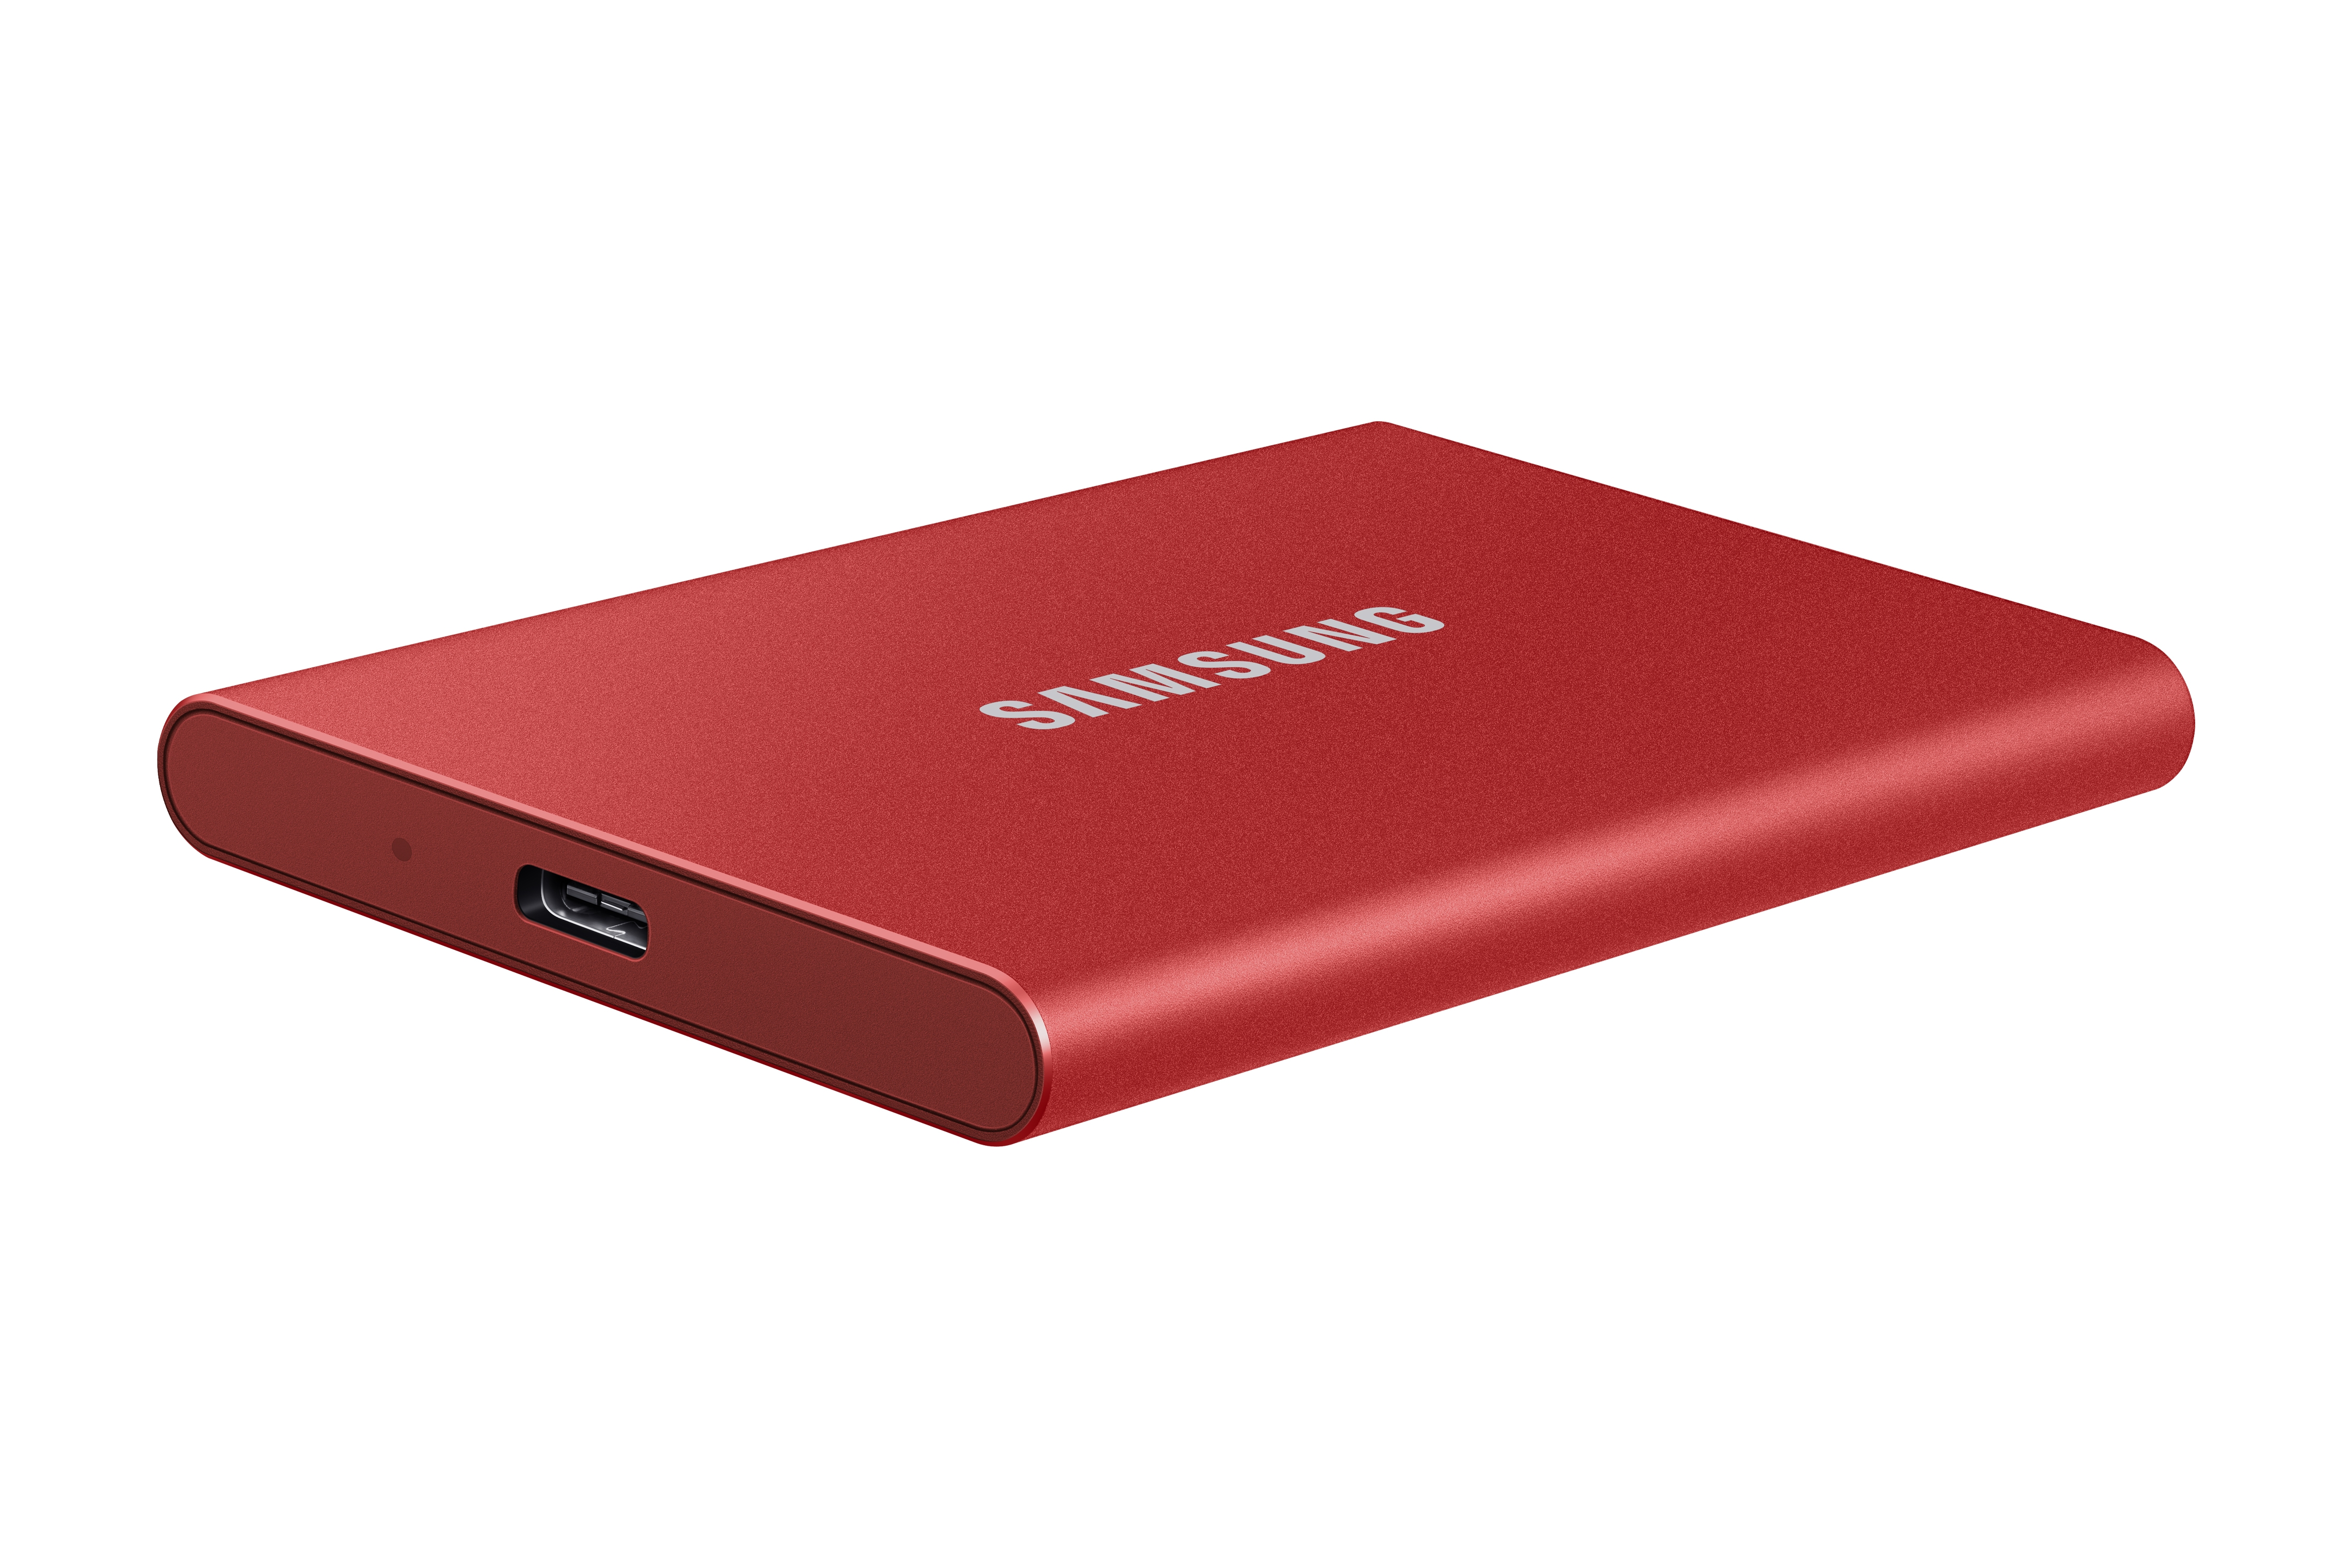 Portable SSD T7 USB 3.2 2TB (Red) & Storage - MU-PC2T0R/AM | Samsung US